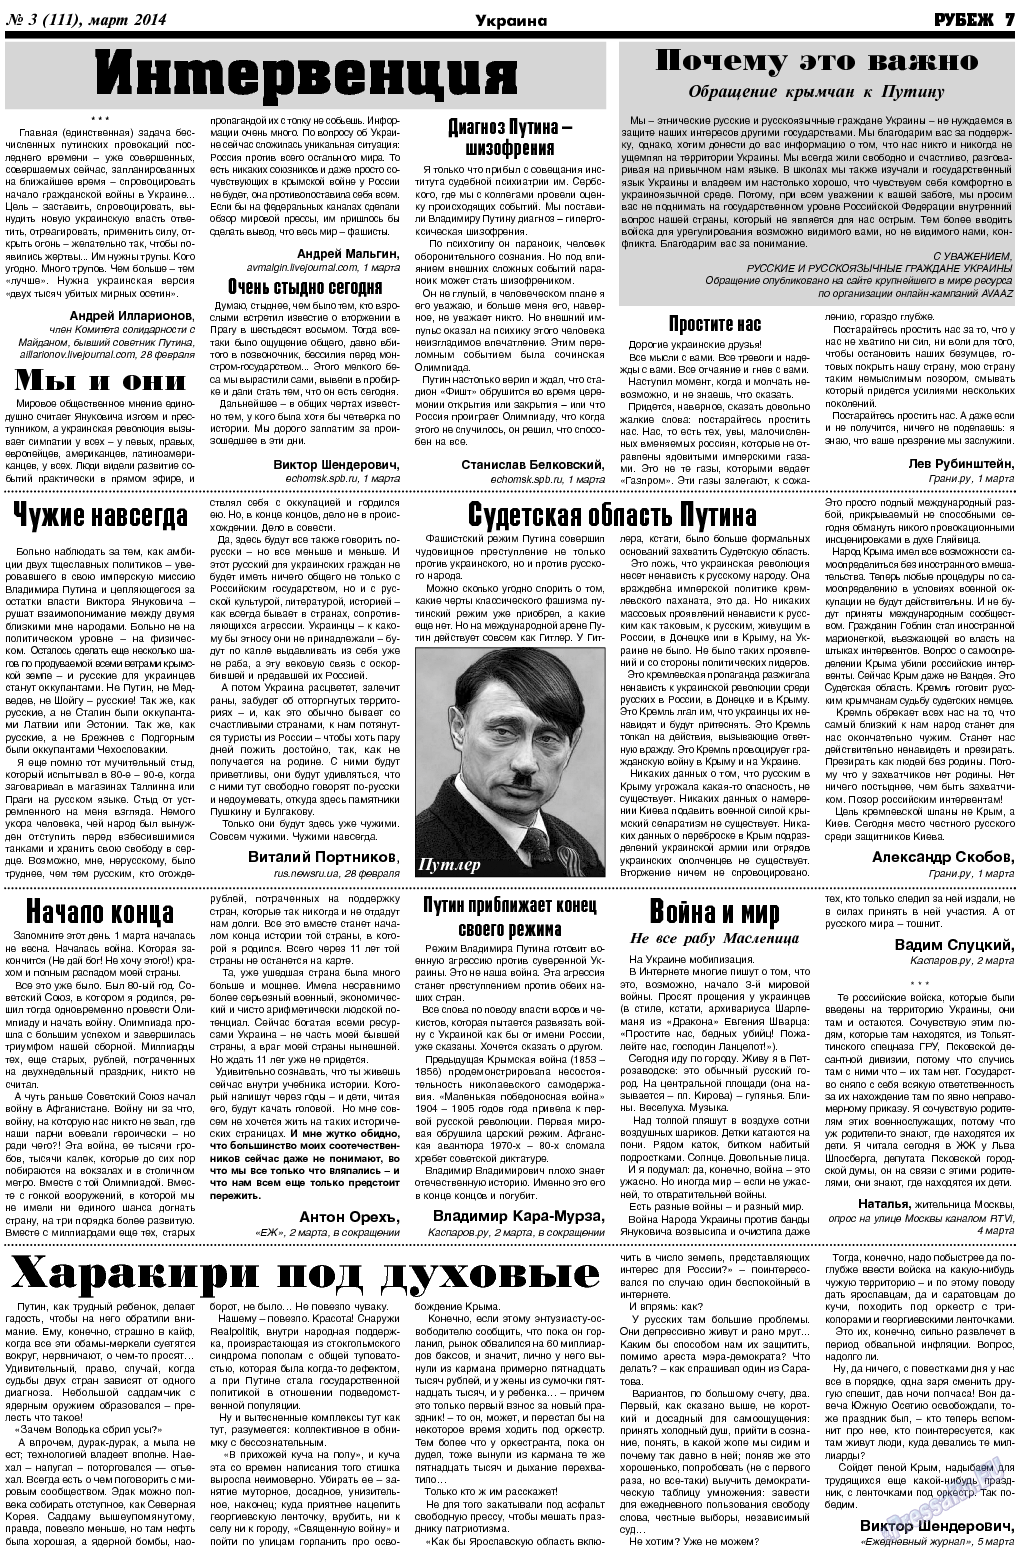 Рубеж, газета. 2014 №3 стр.7